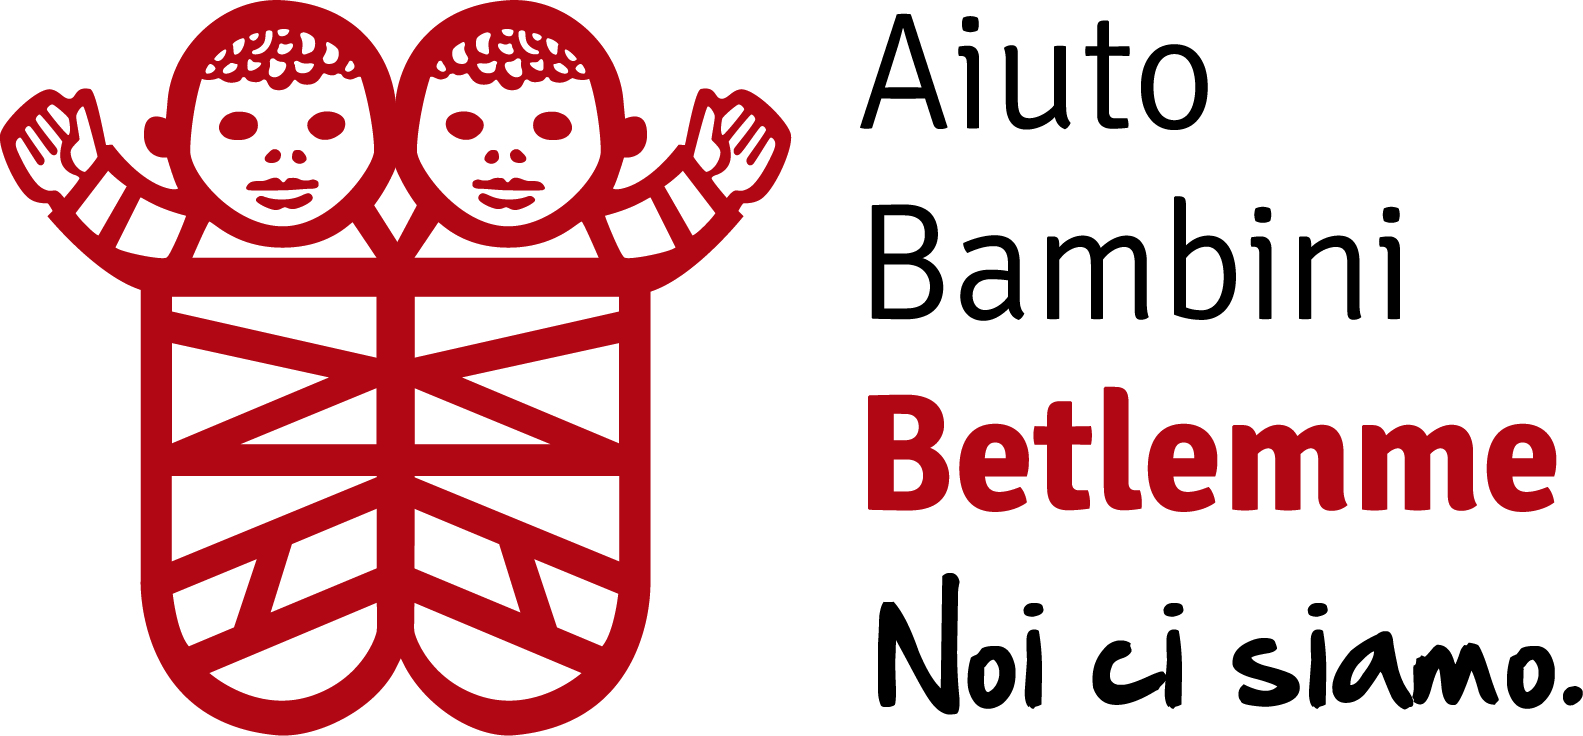 Aiuto Bambini Betlemme ODV ETS Onlus logo